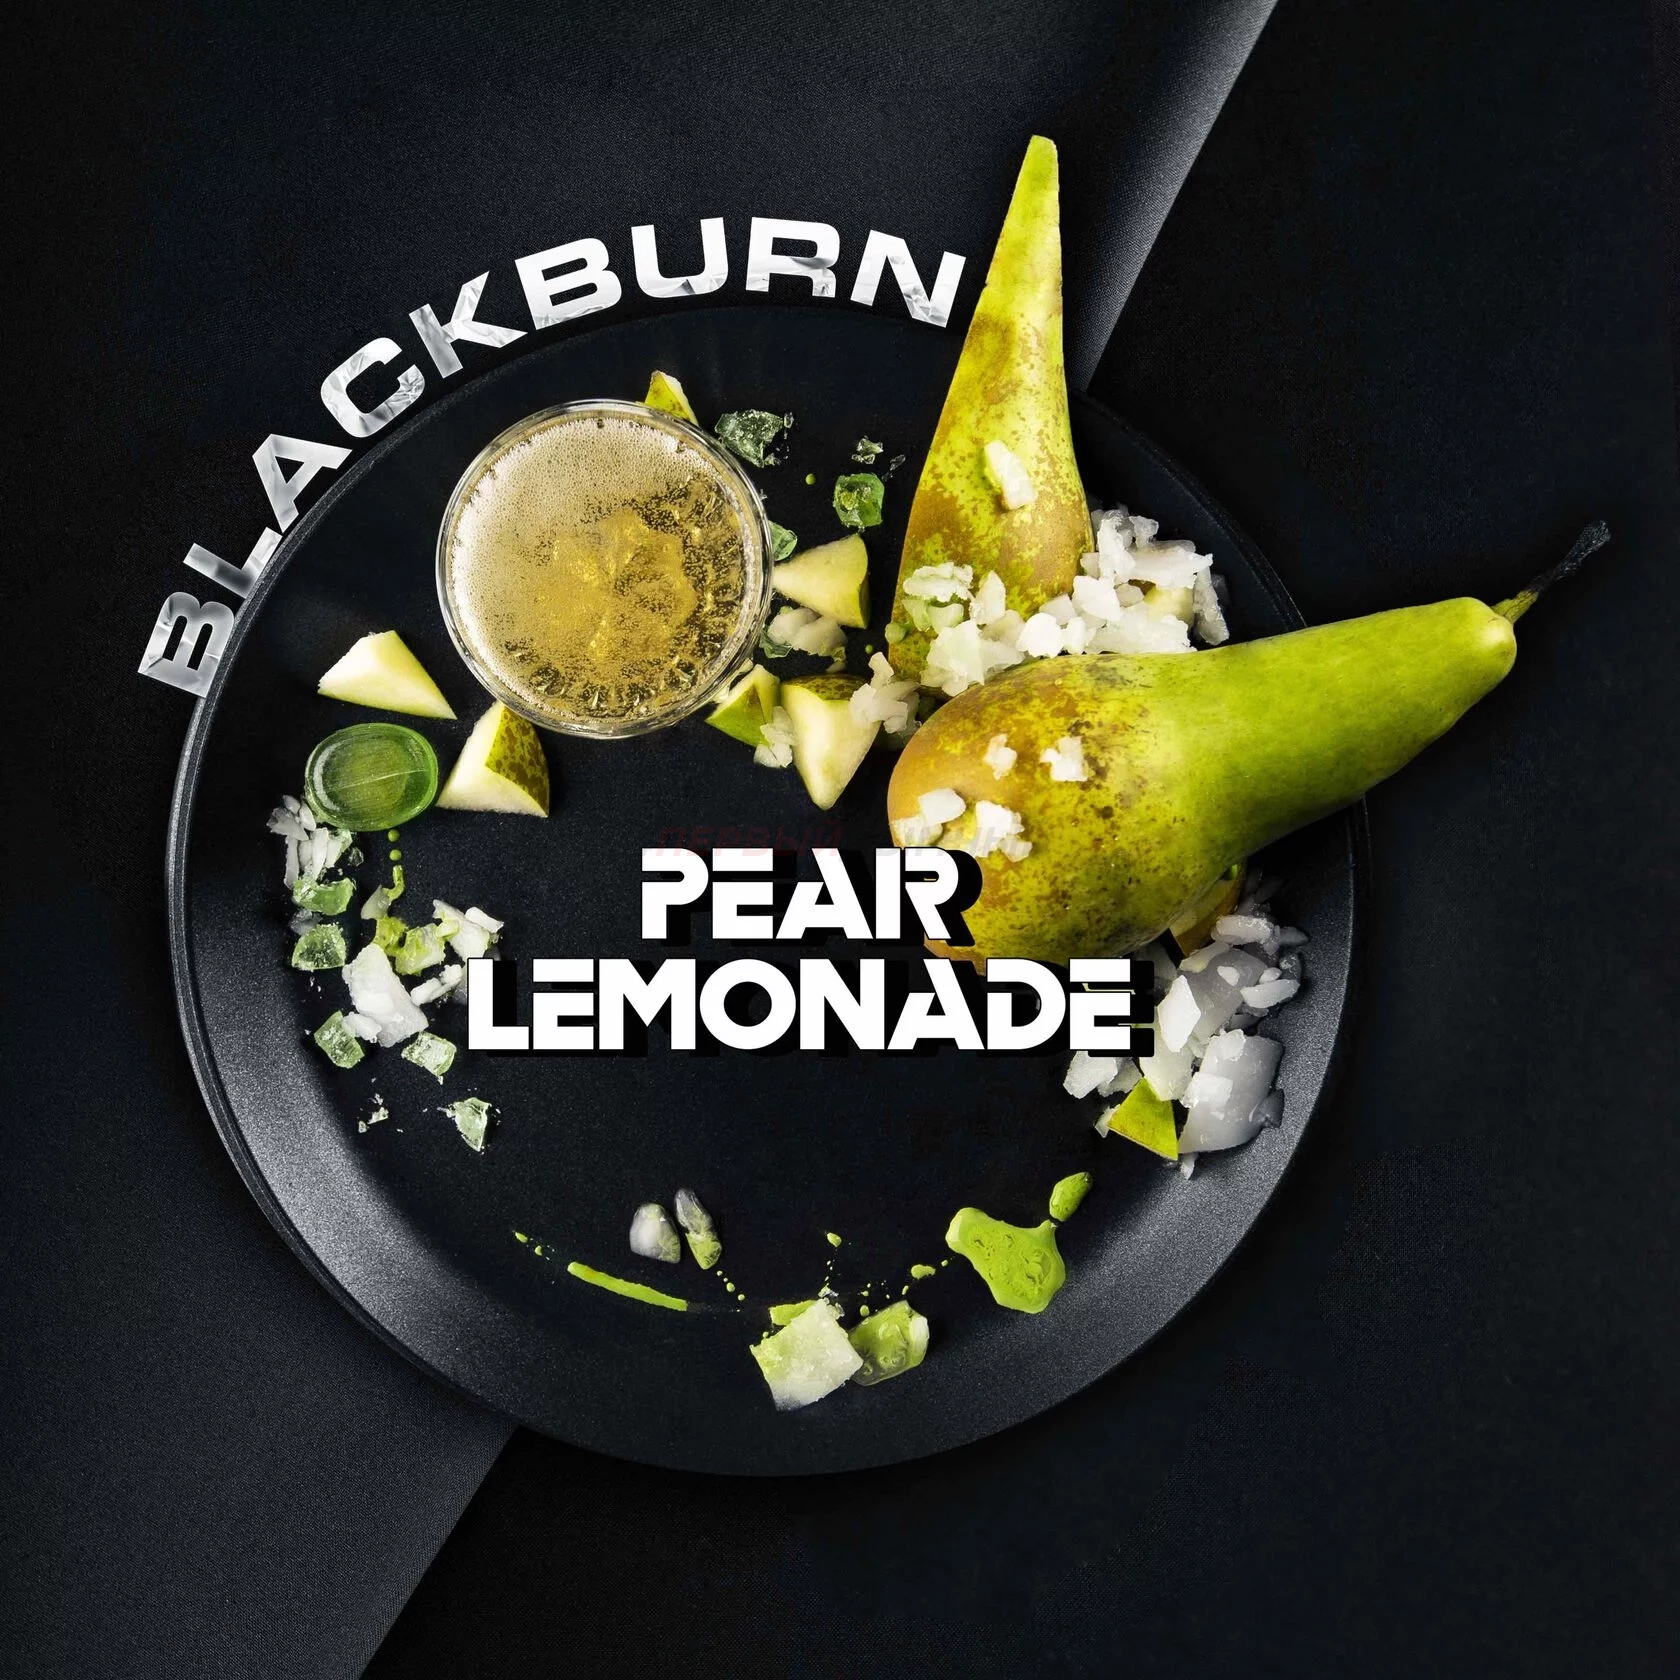 (МТ) BlackBurn 100гр Pear Lemonade - Грушевый лимонад